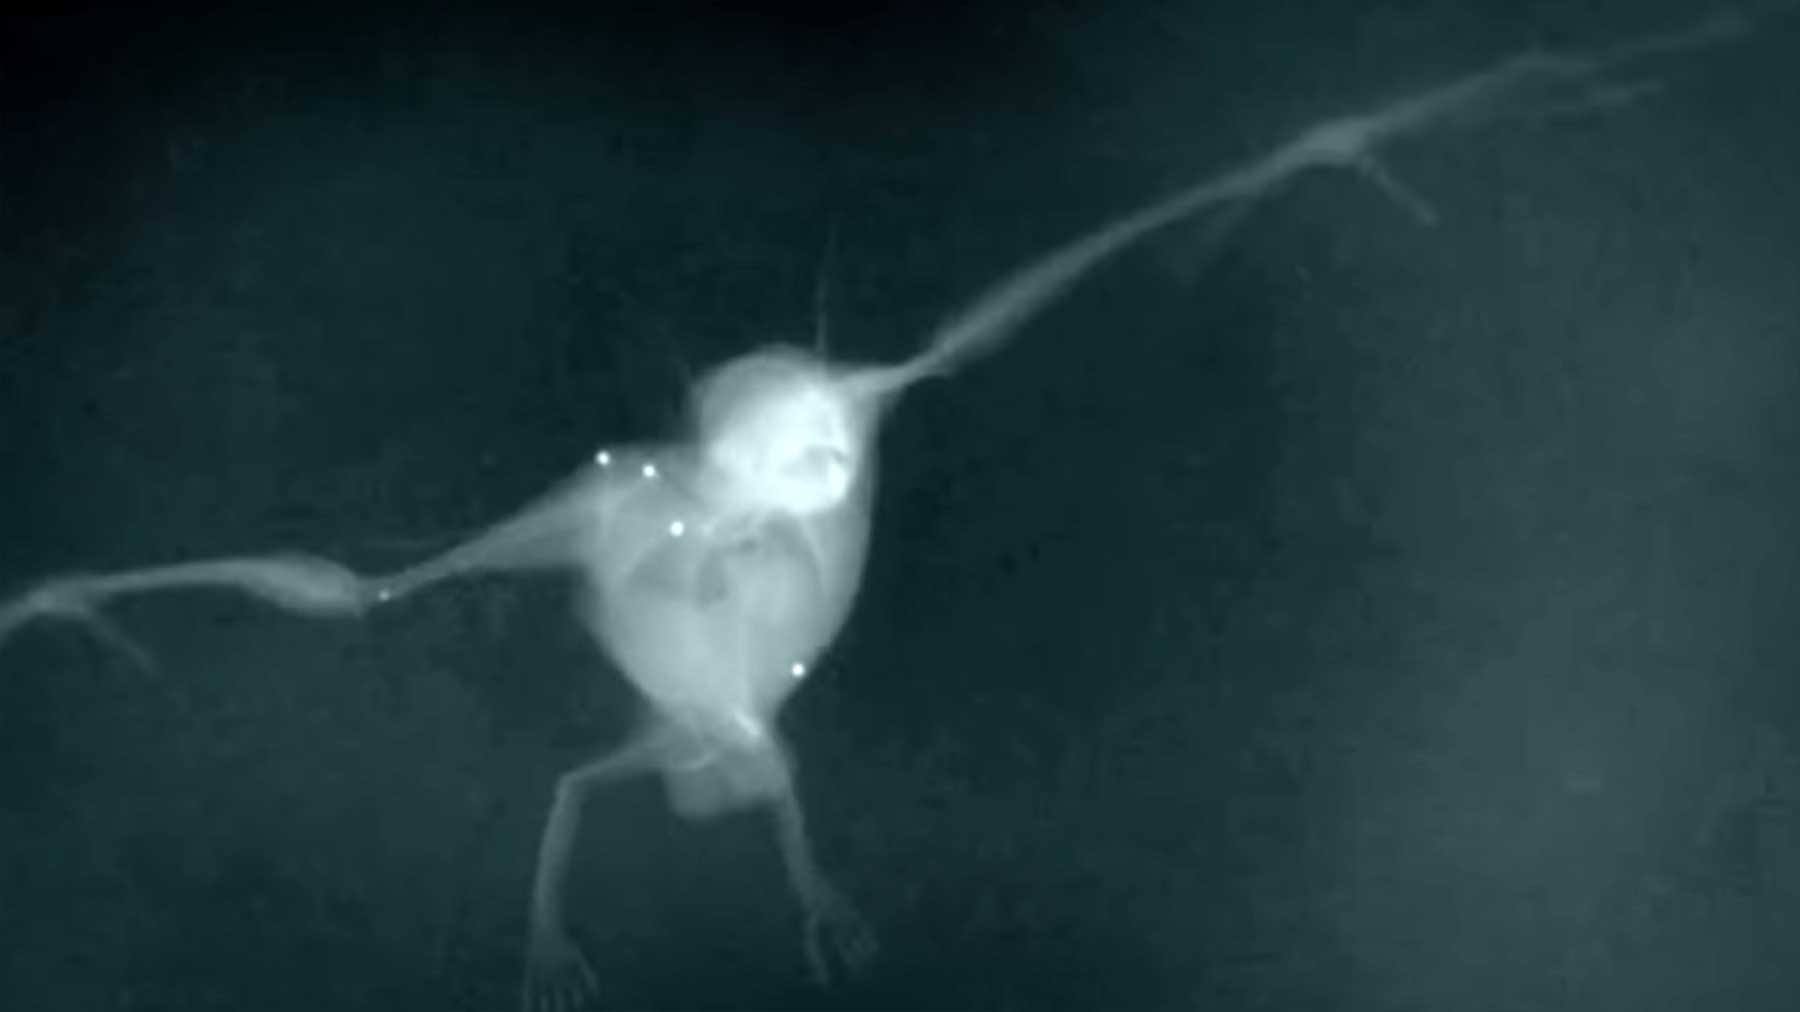 Fledermausflug in Zeitlupen-Röntgenaufnahmen